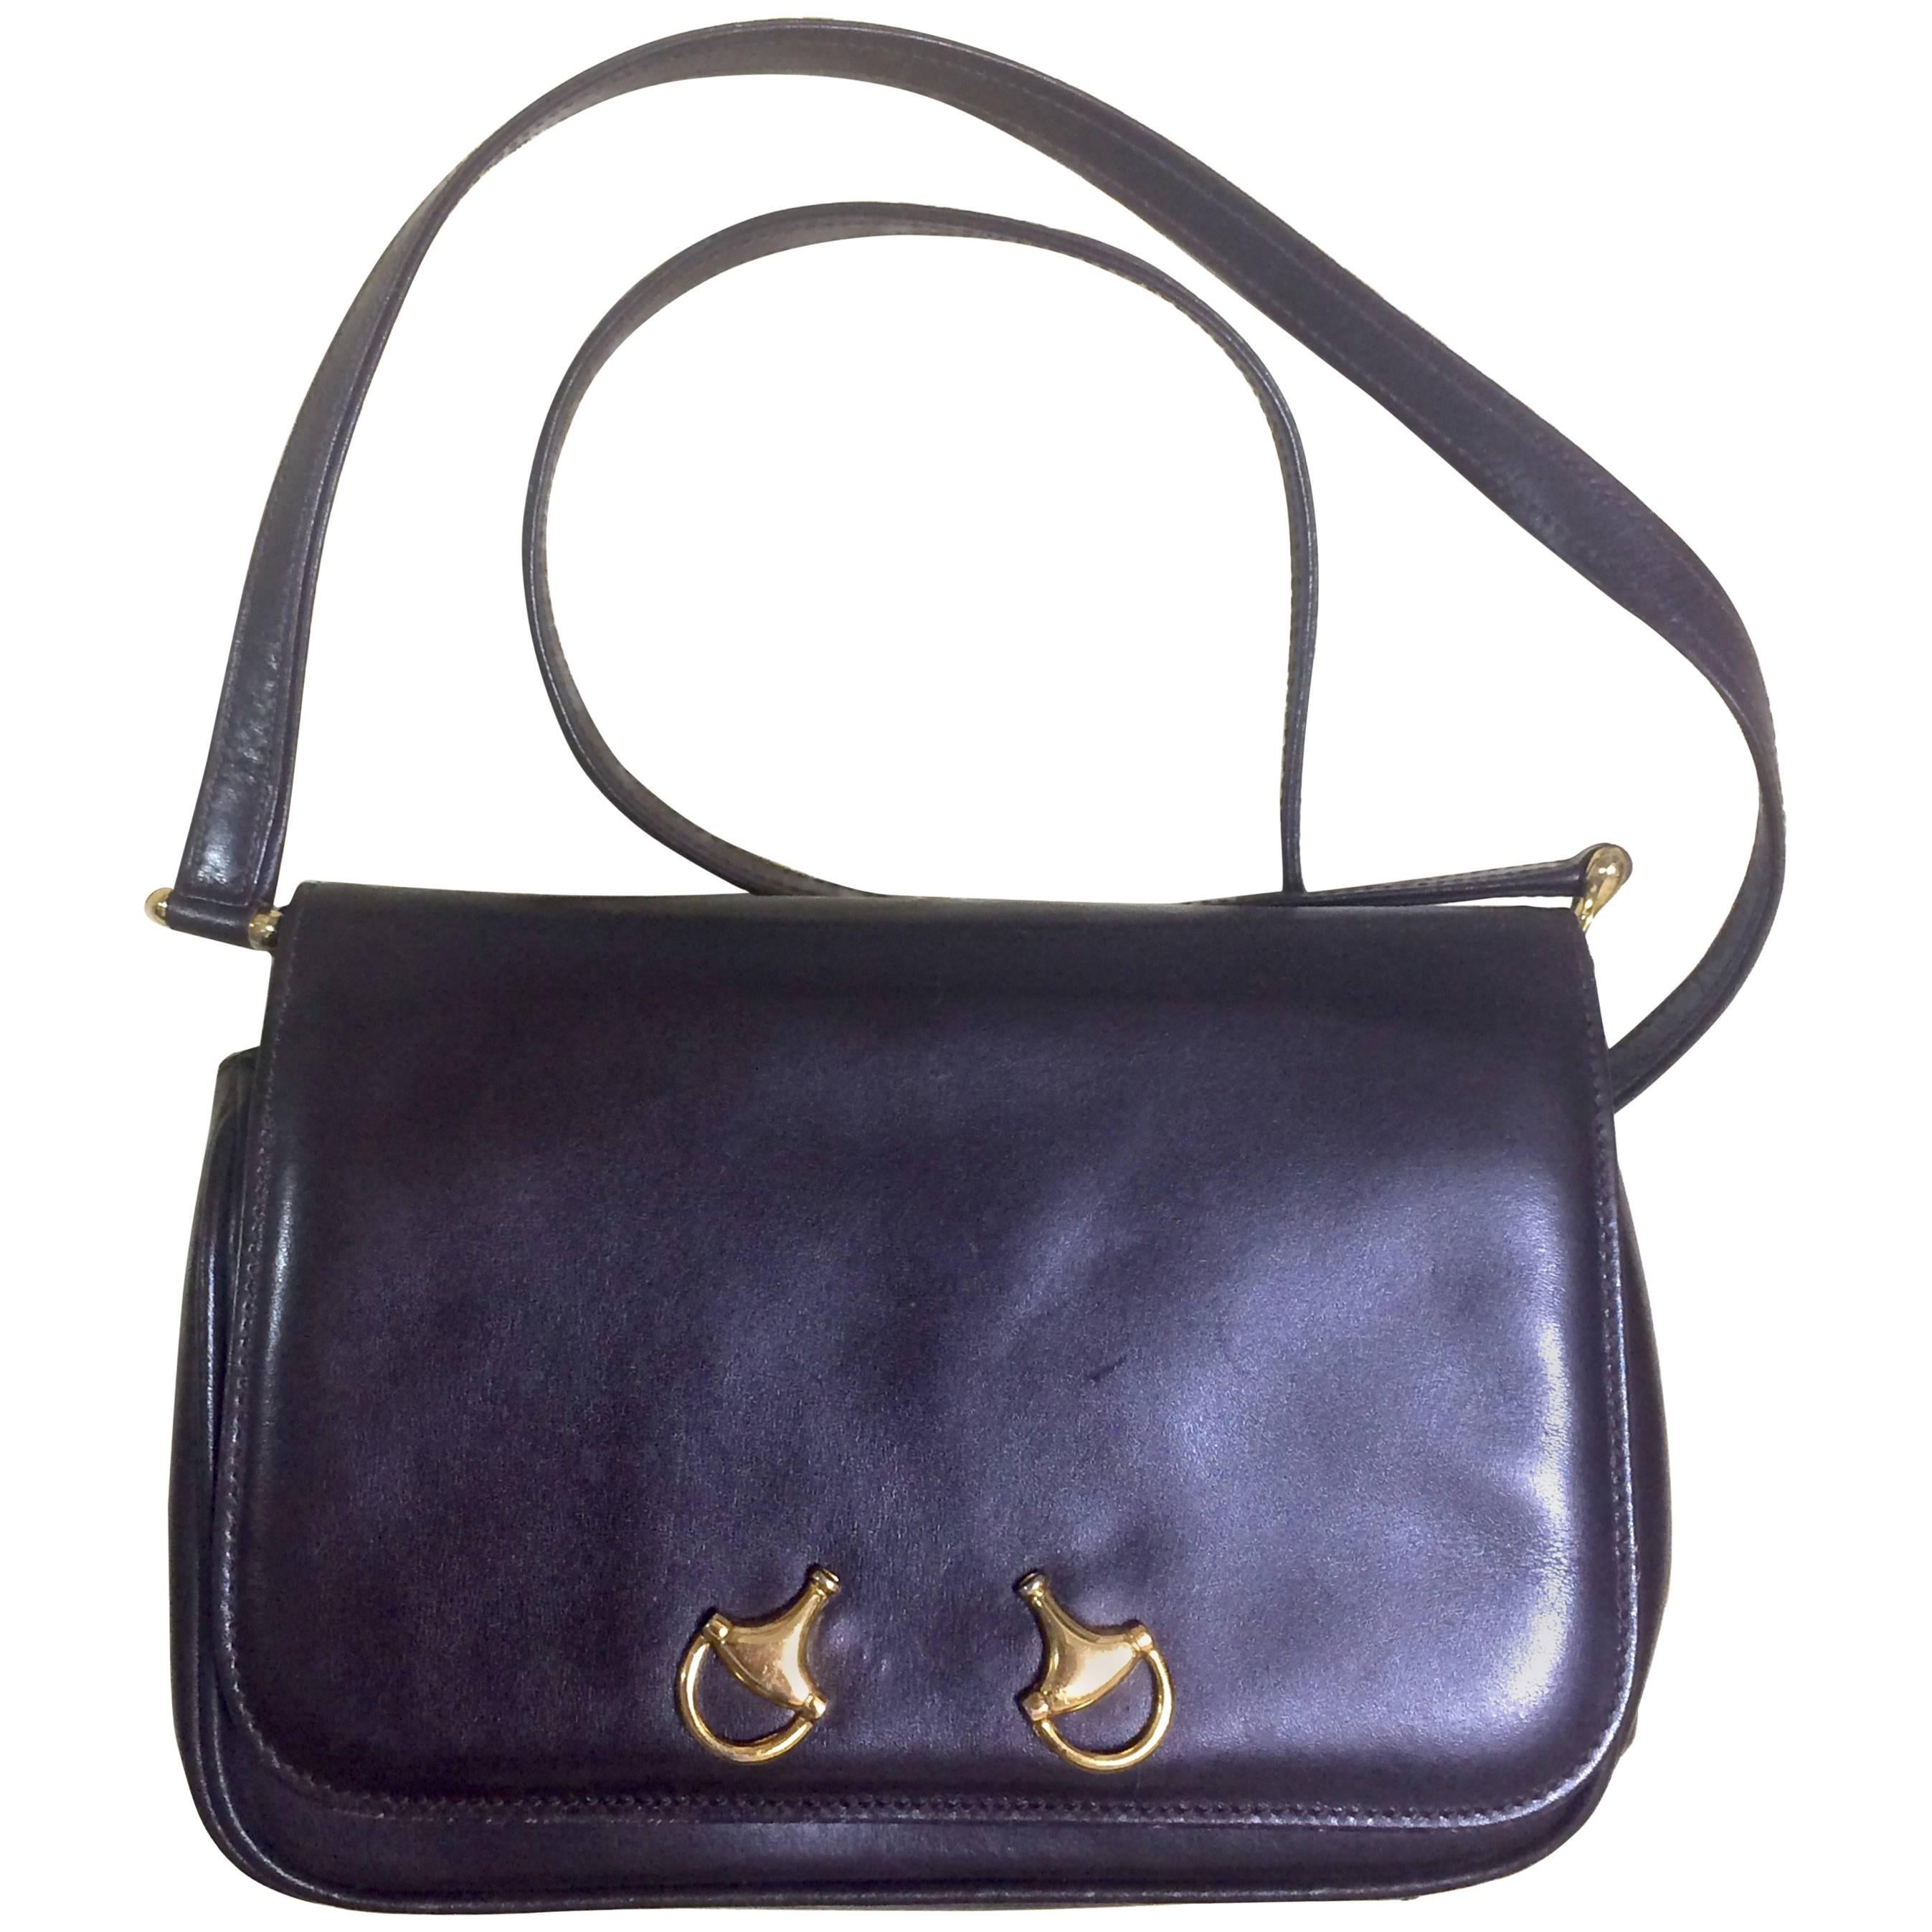 Vintage Gucci dark brown leather classic shoulder bag with 2 horsebit motifs.